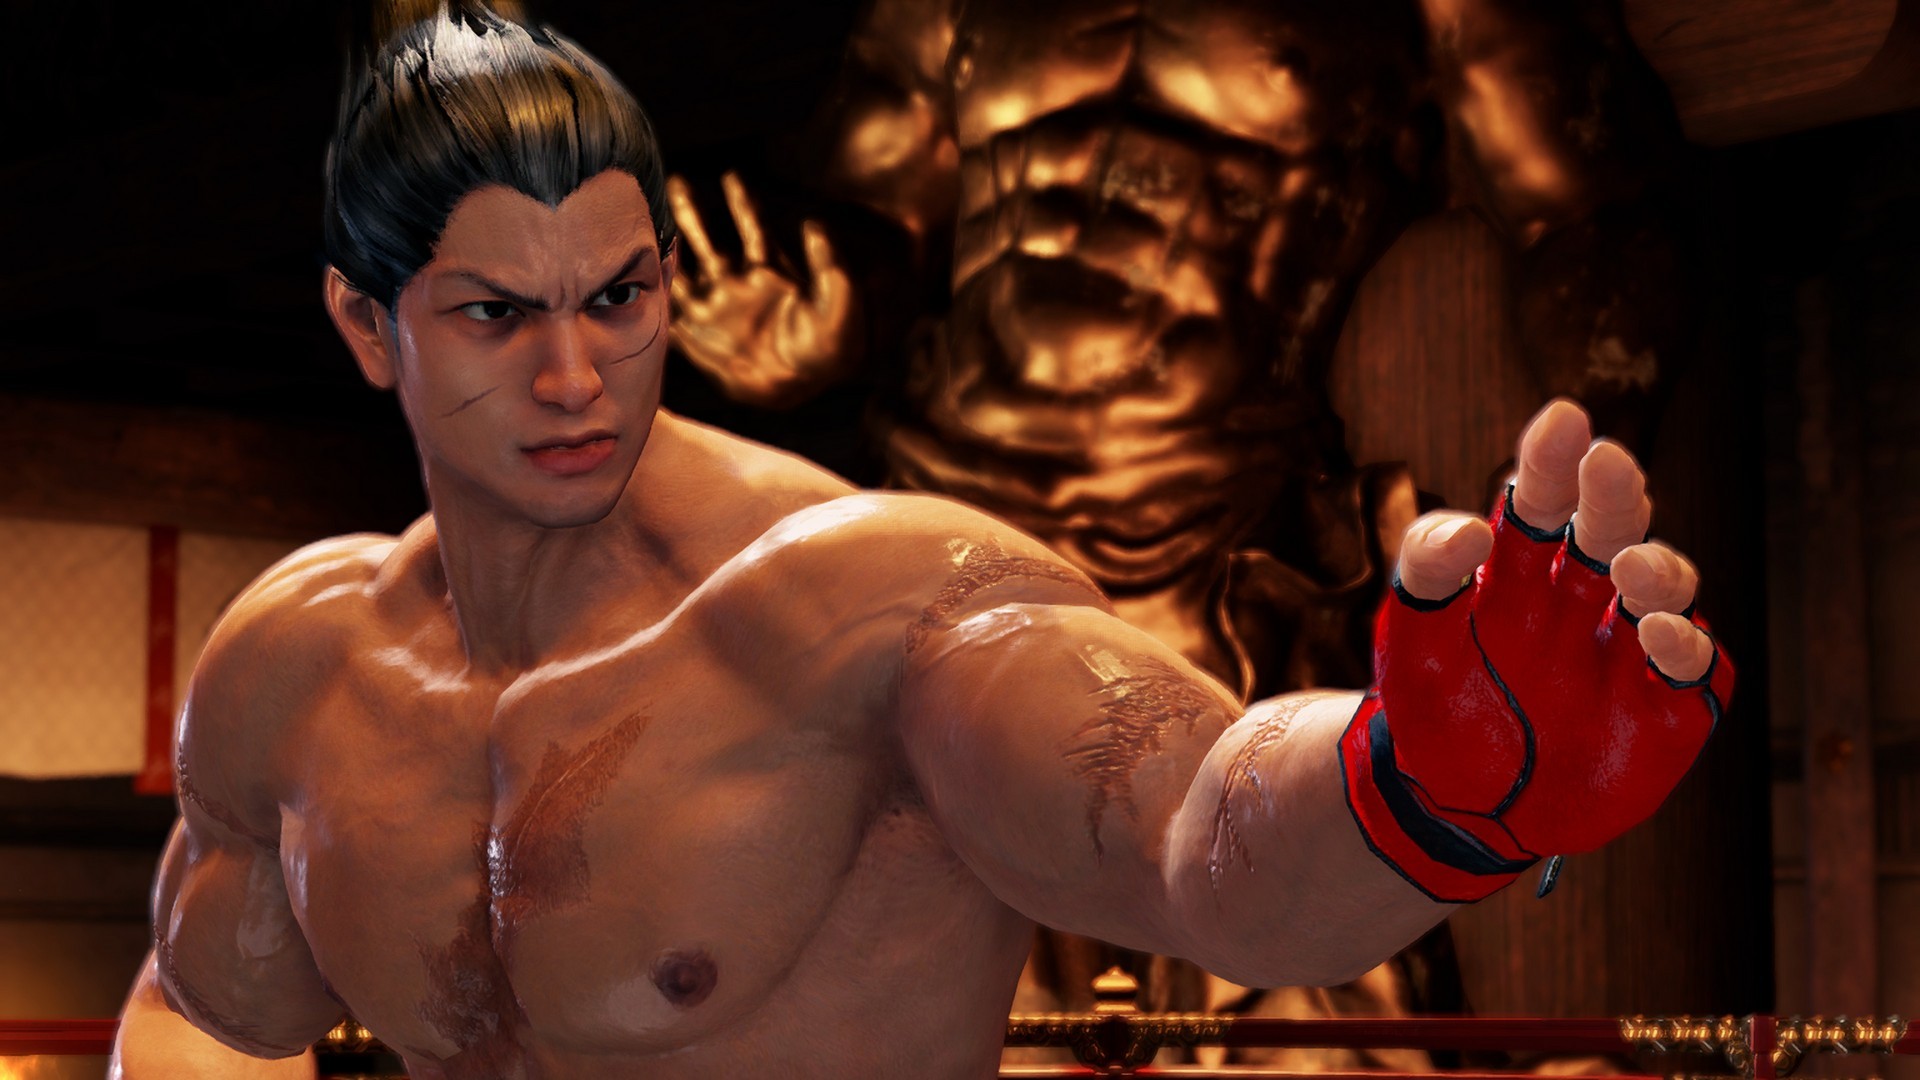 Virtua Fighter 5 Ultimate Showdown x Tekken 7 DLC now available